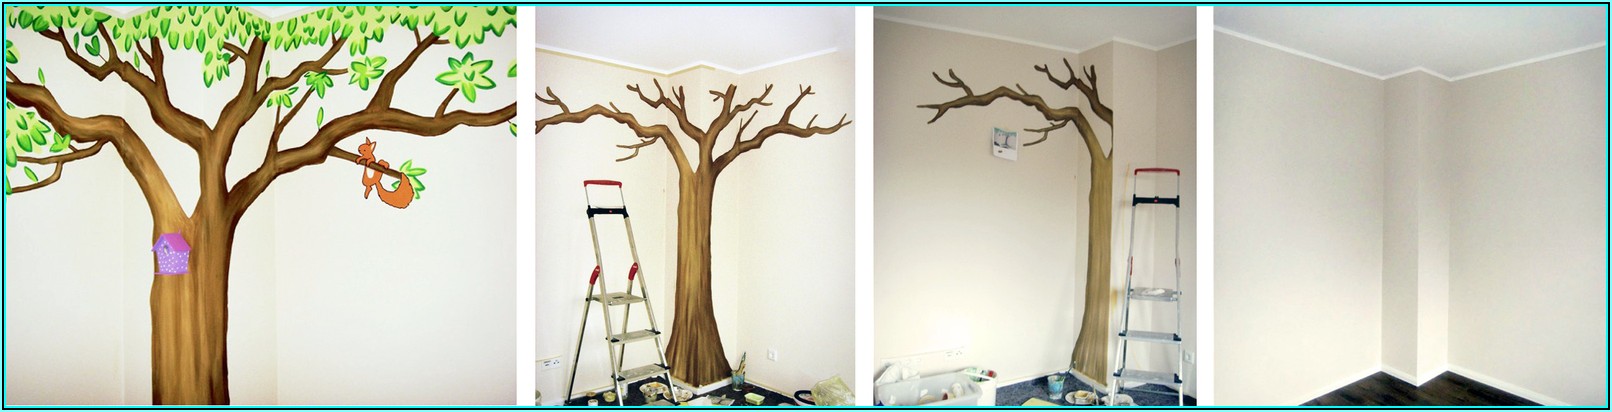 Baum An Die Wand Malen Kinderzimmer